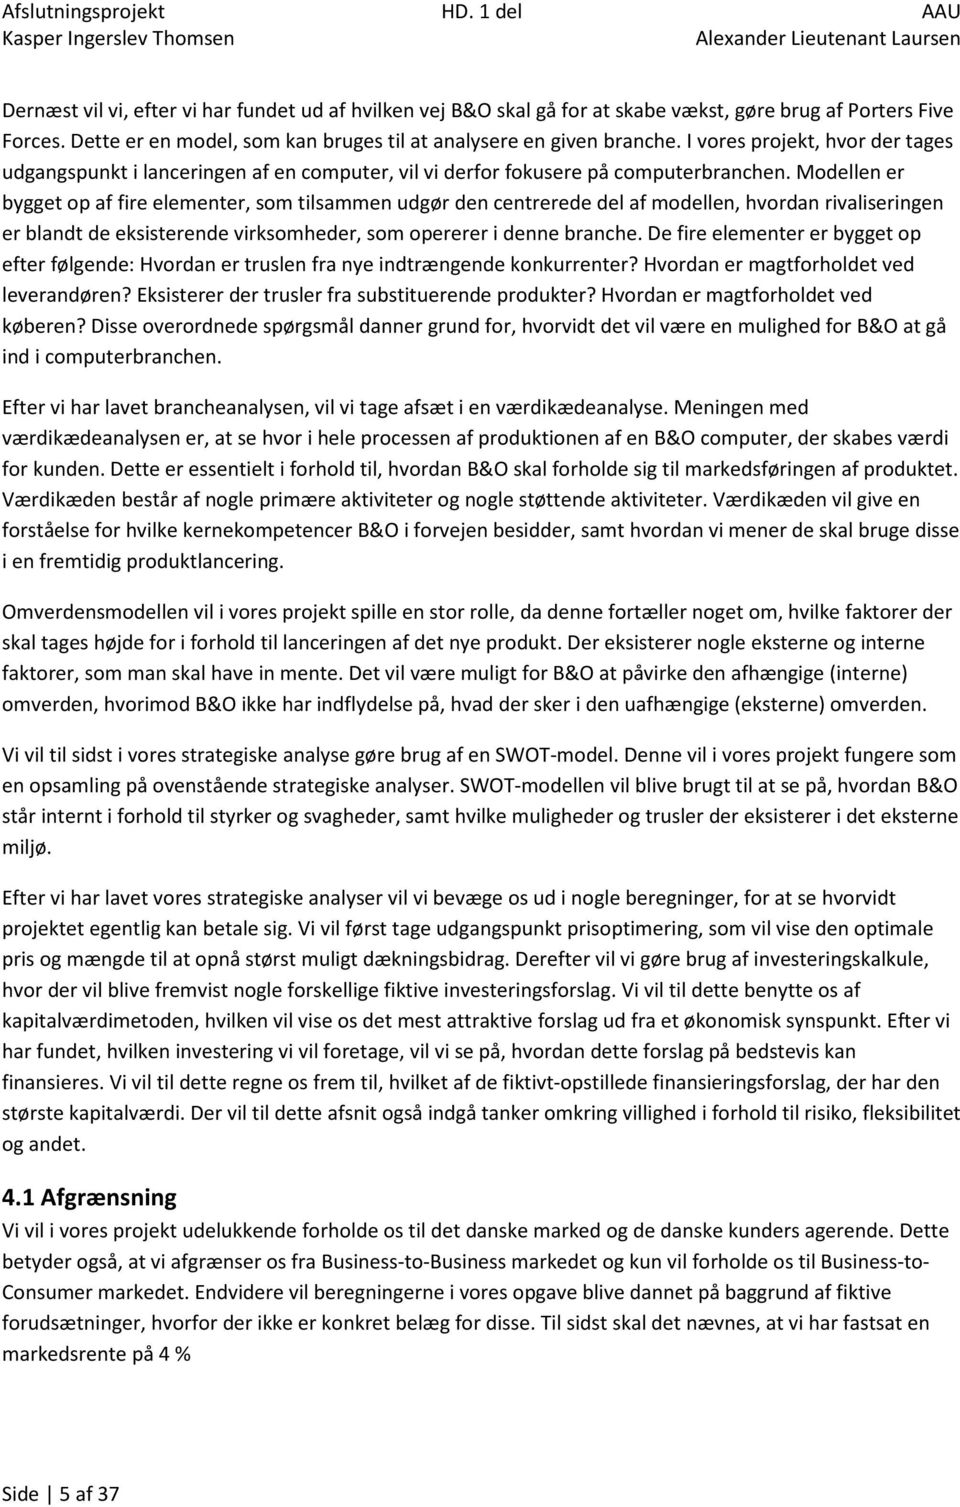 B&O. Afgangsprojekt, HD 1. del. Alexander Lieutenant Laursen & Kasper  Ingerslev Thomsen. HD-studiets 1. del. Hold nr. B1. - PDF Free Download